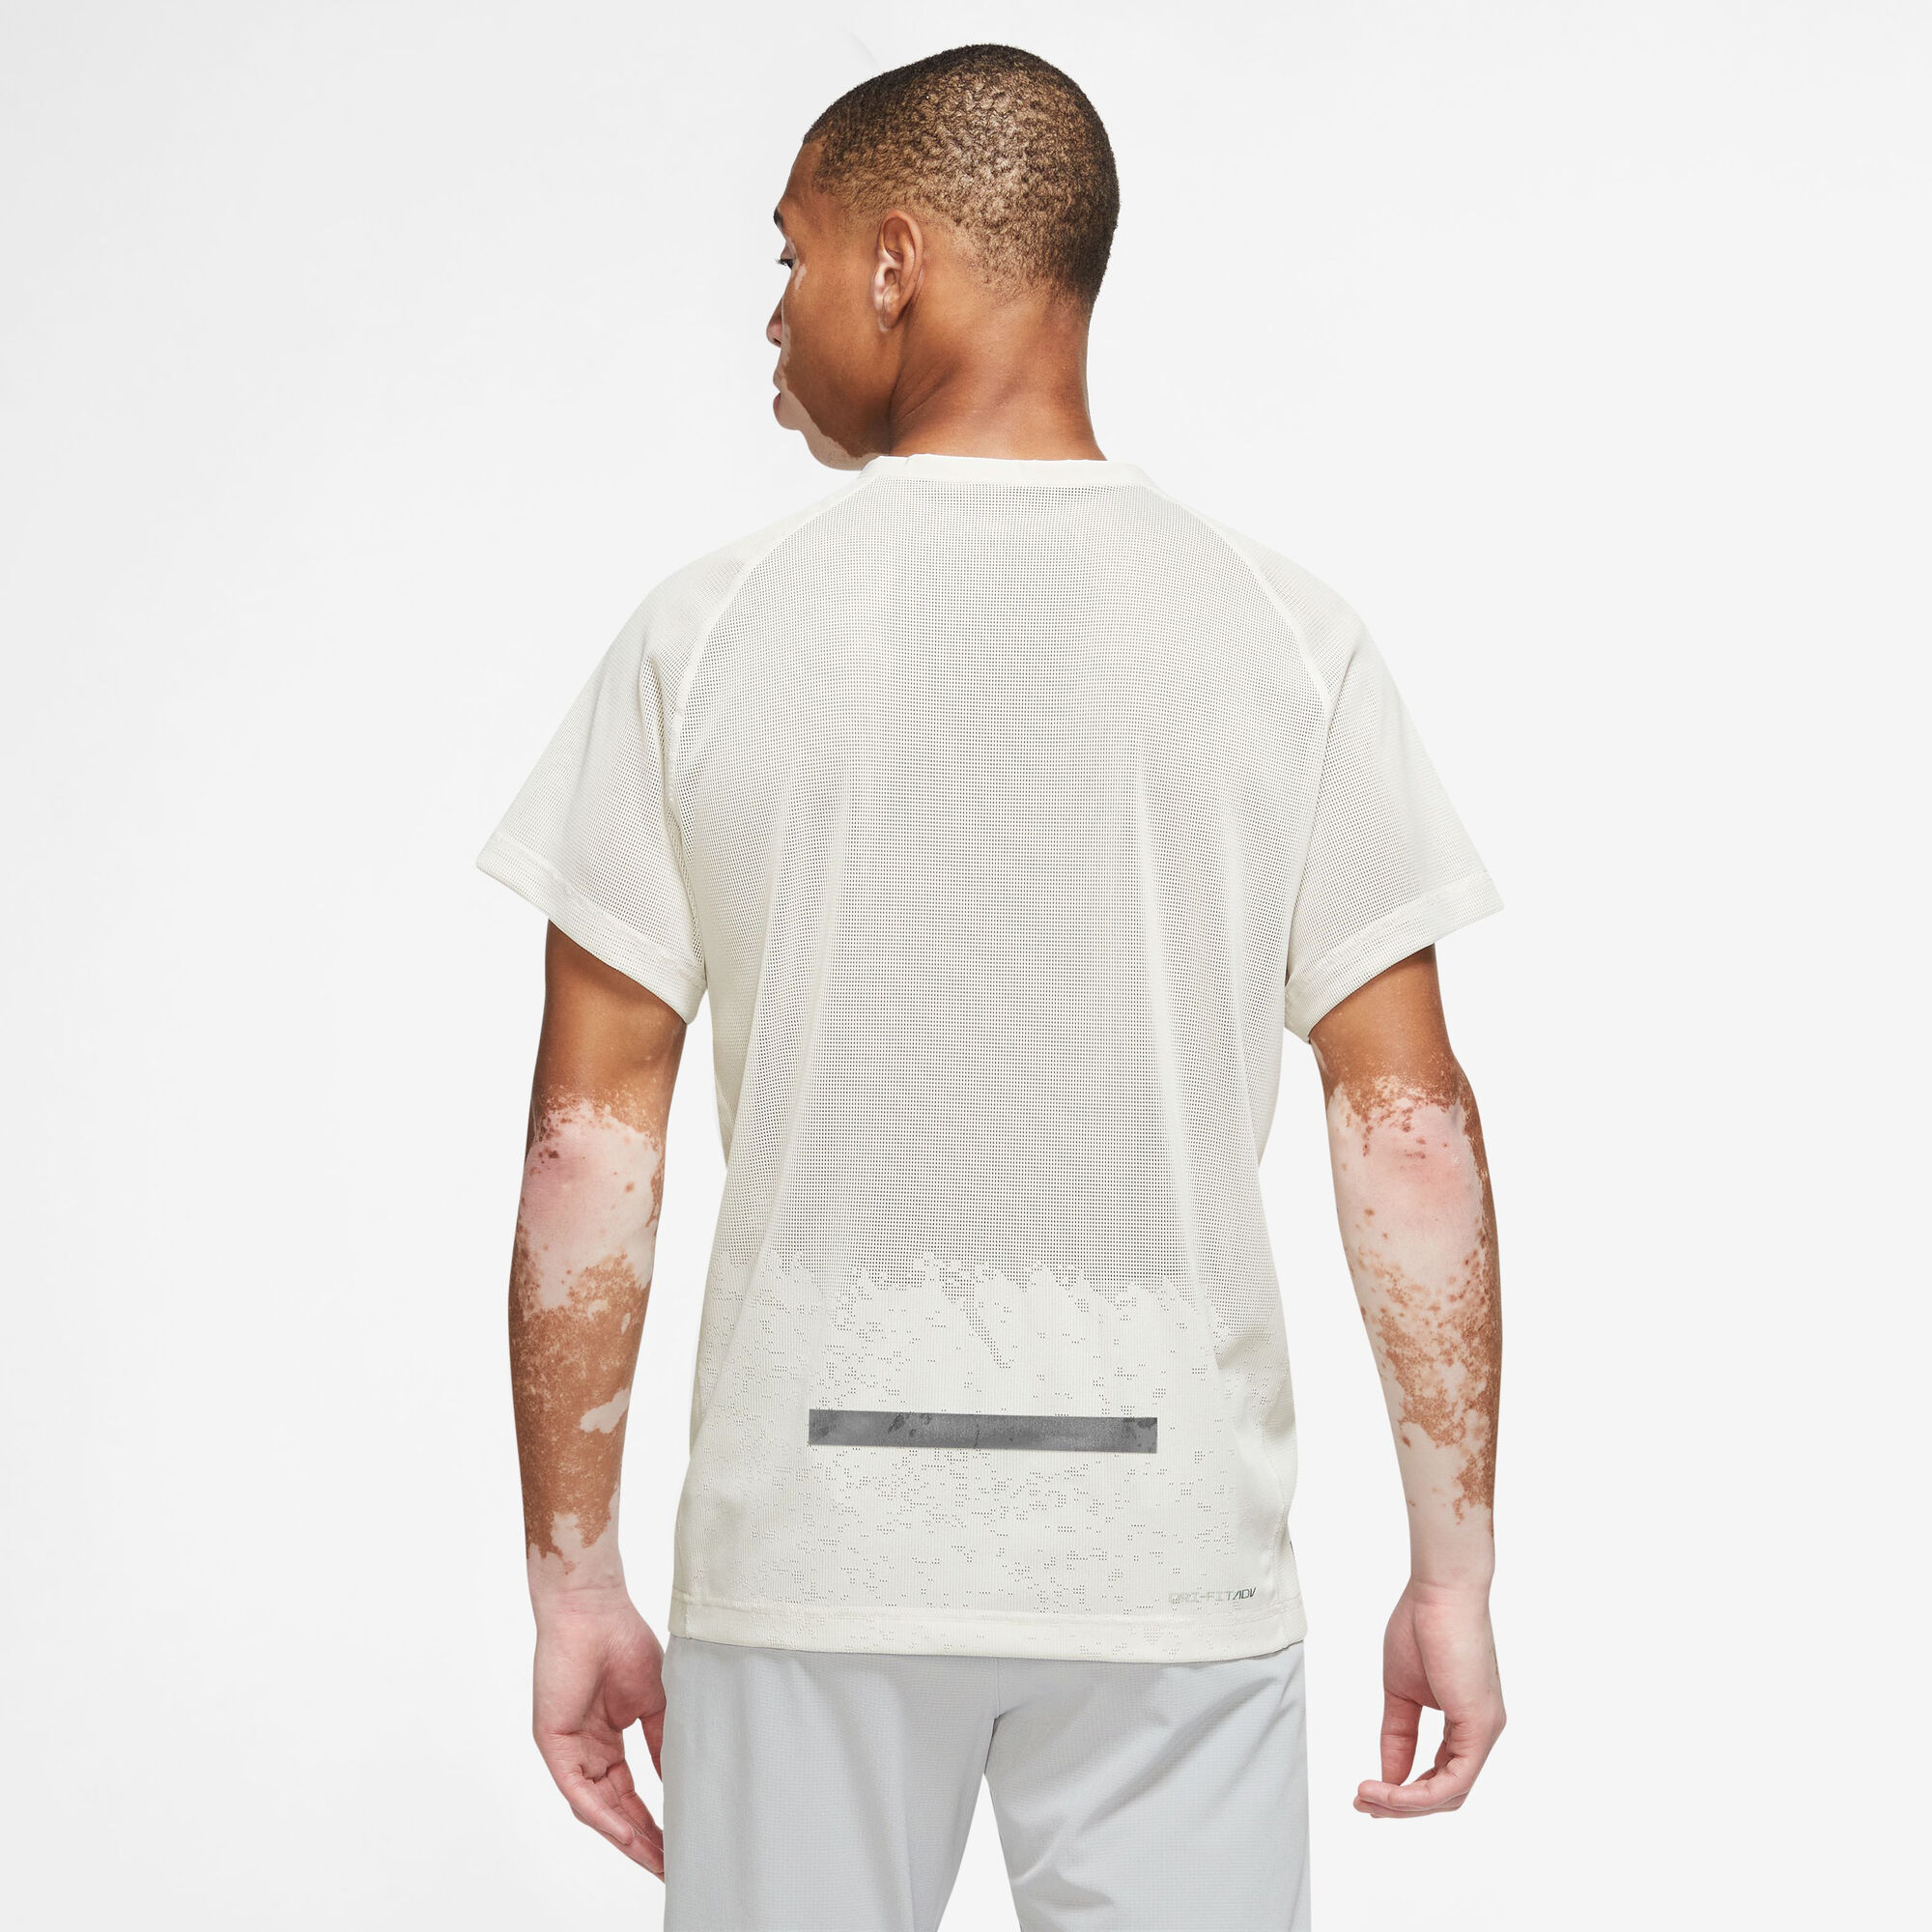 Buy Nike Dri-Fit Advantage Run Division Techknit Running Shirts